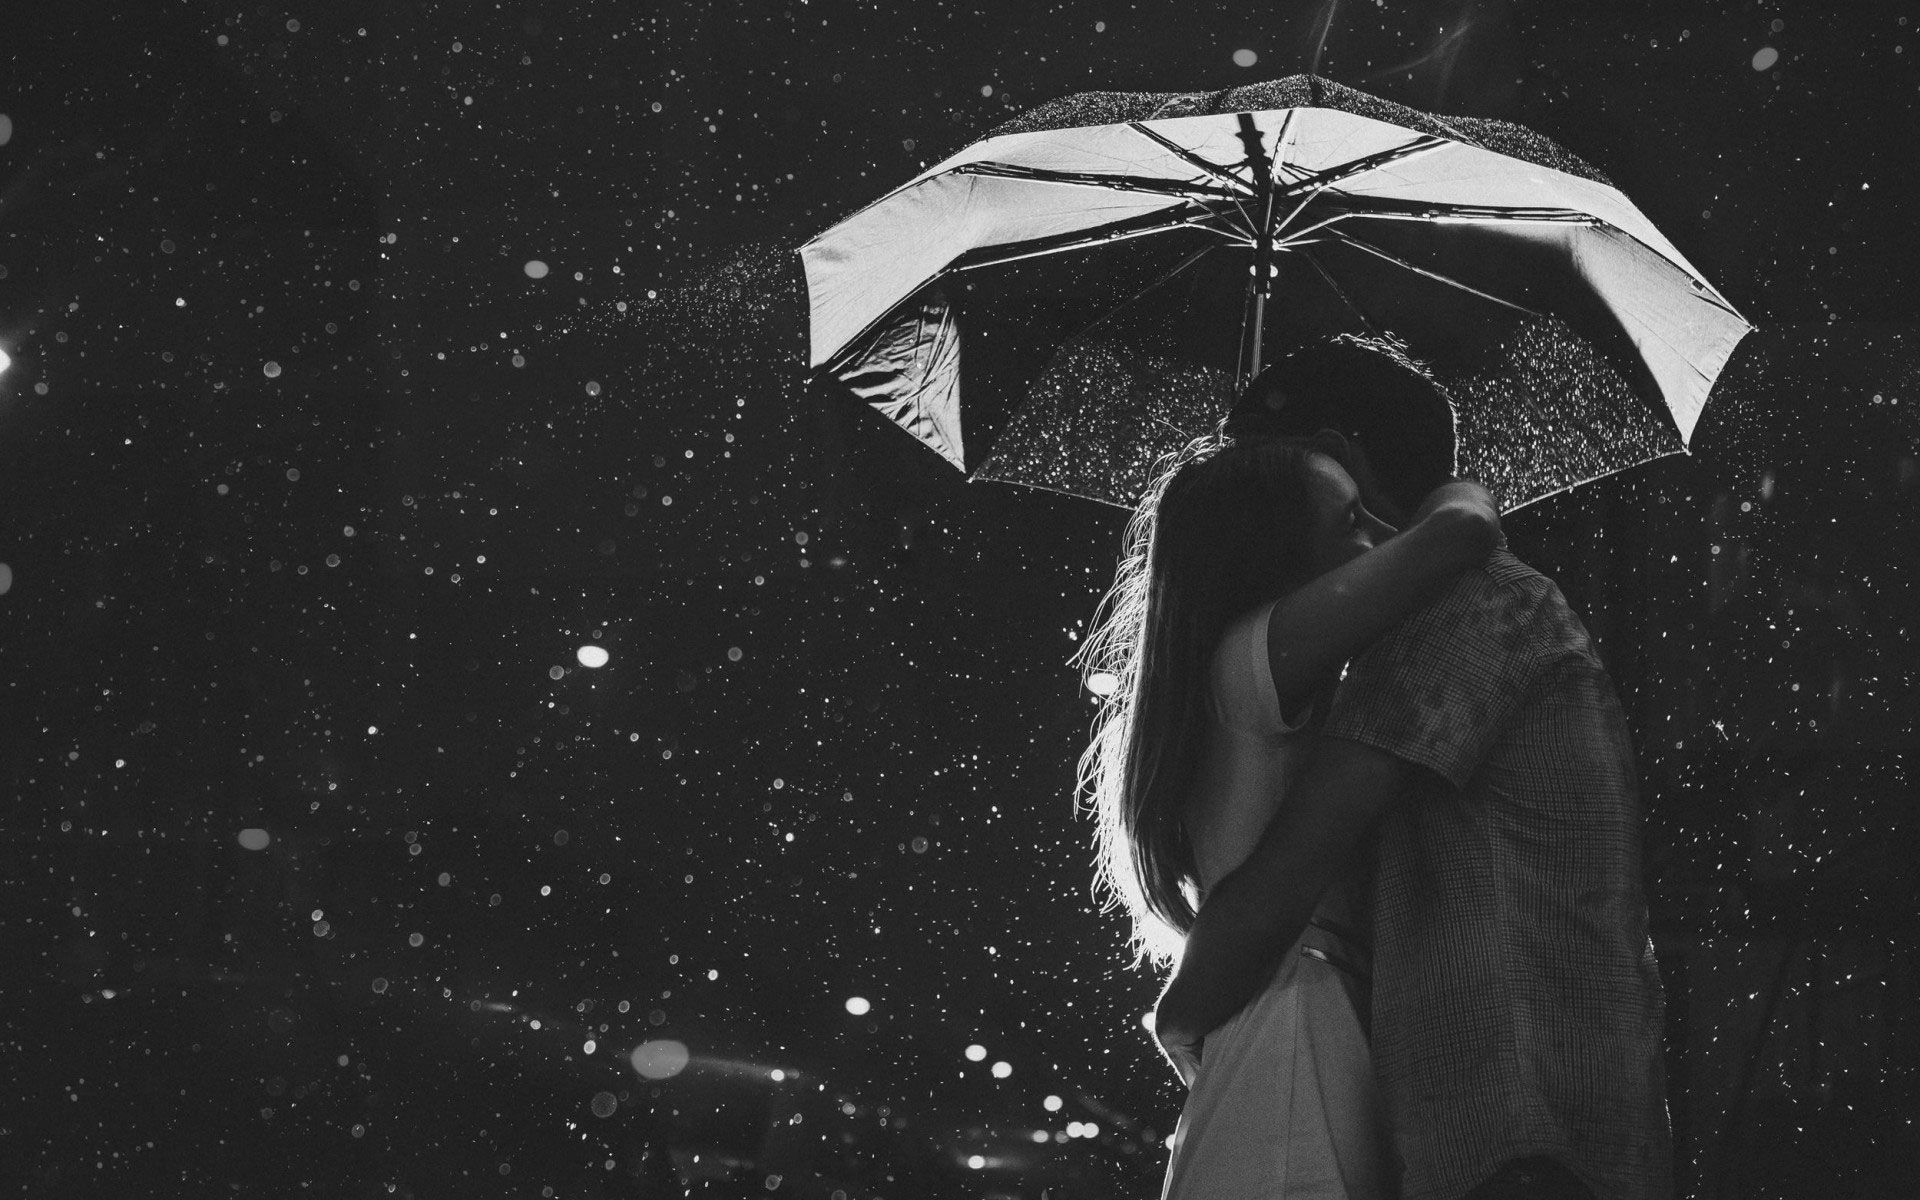 Sweet Black and White Romance Wallpaper of Love Couples. Couple in rain, Umbrella, Love wallpaper